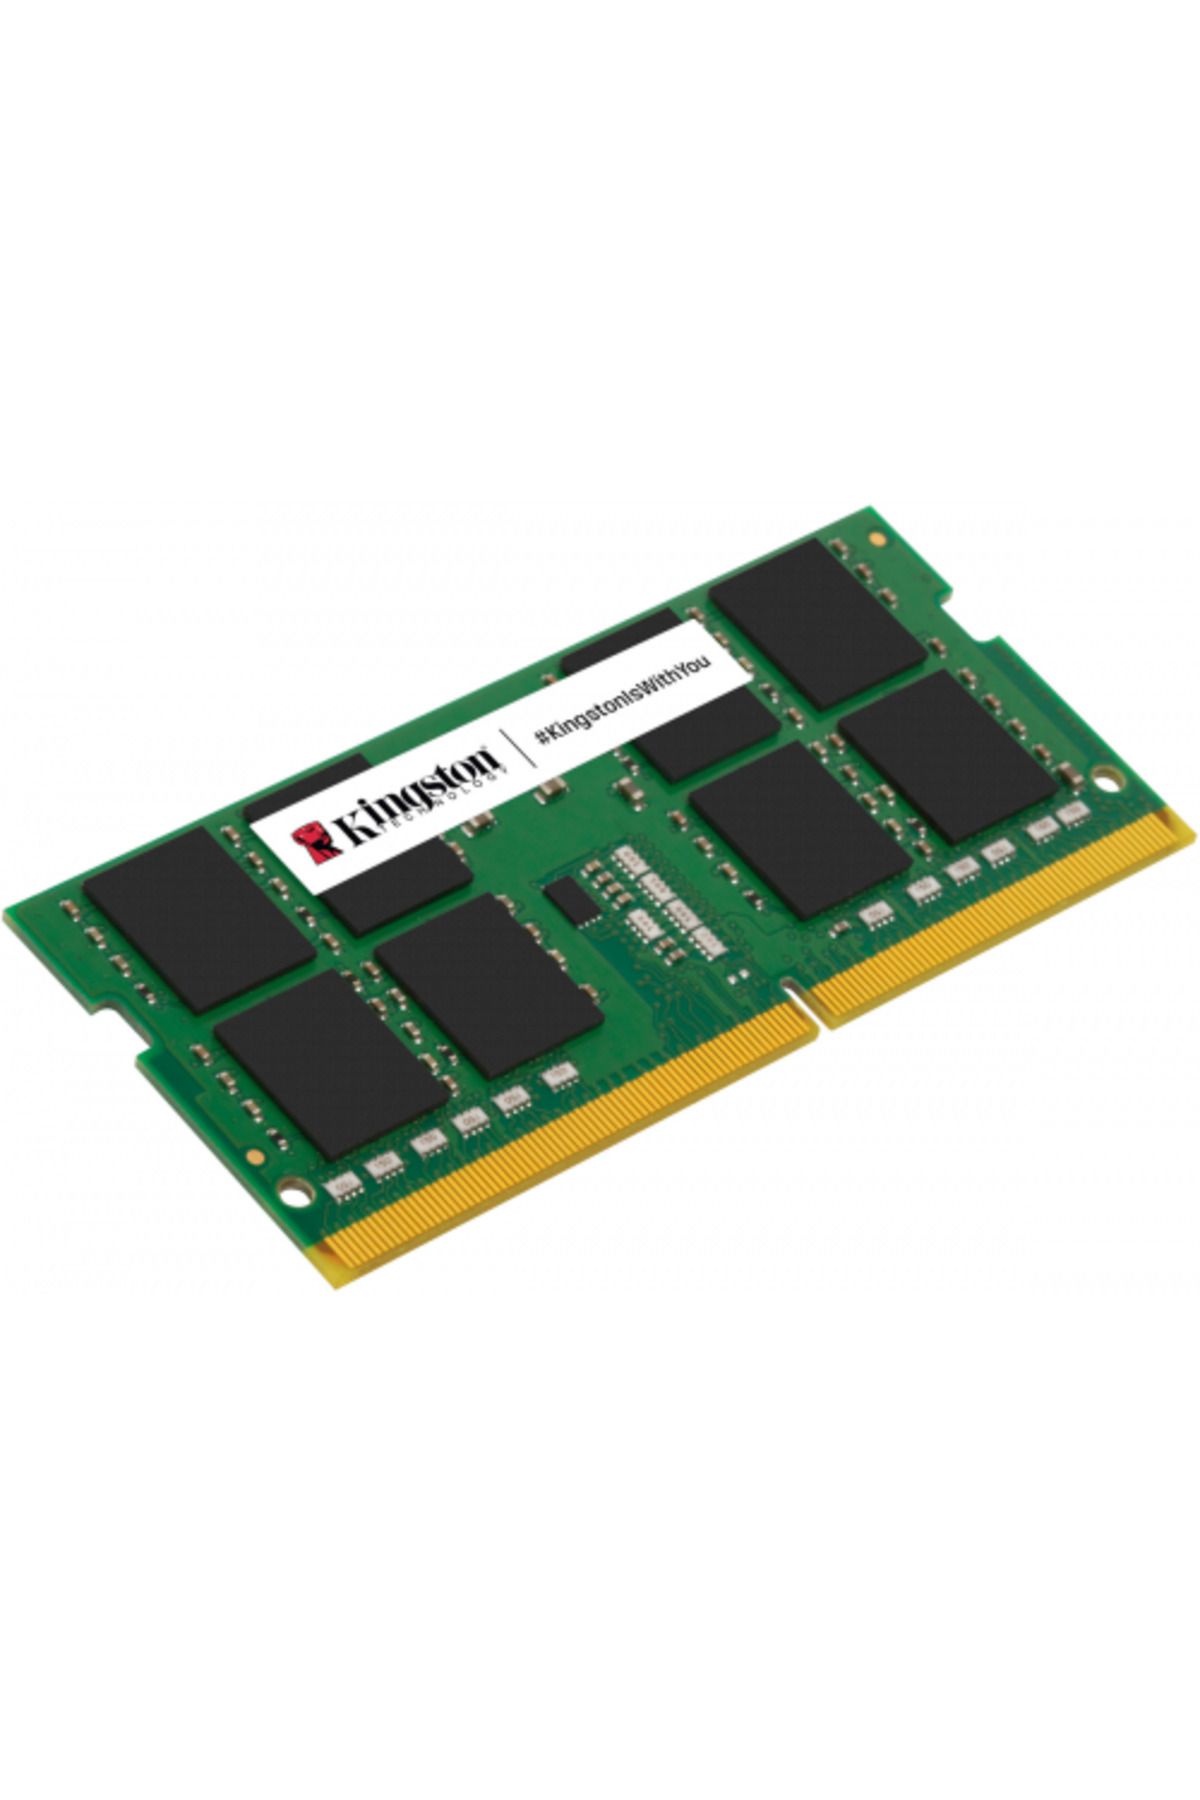 DTS Teknoloji Kingston 8GB DDR3 1600 Mhz Notebook Dizüstü Ram Bellek